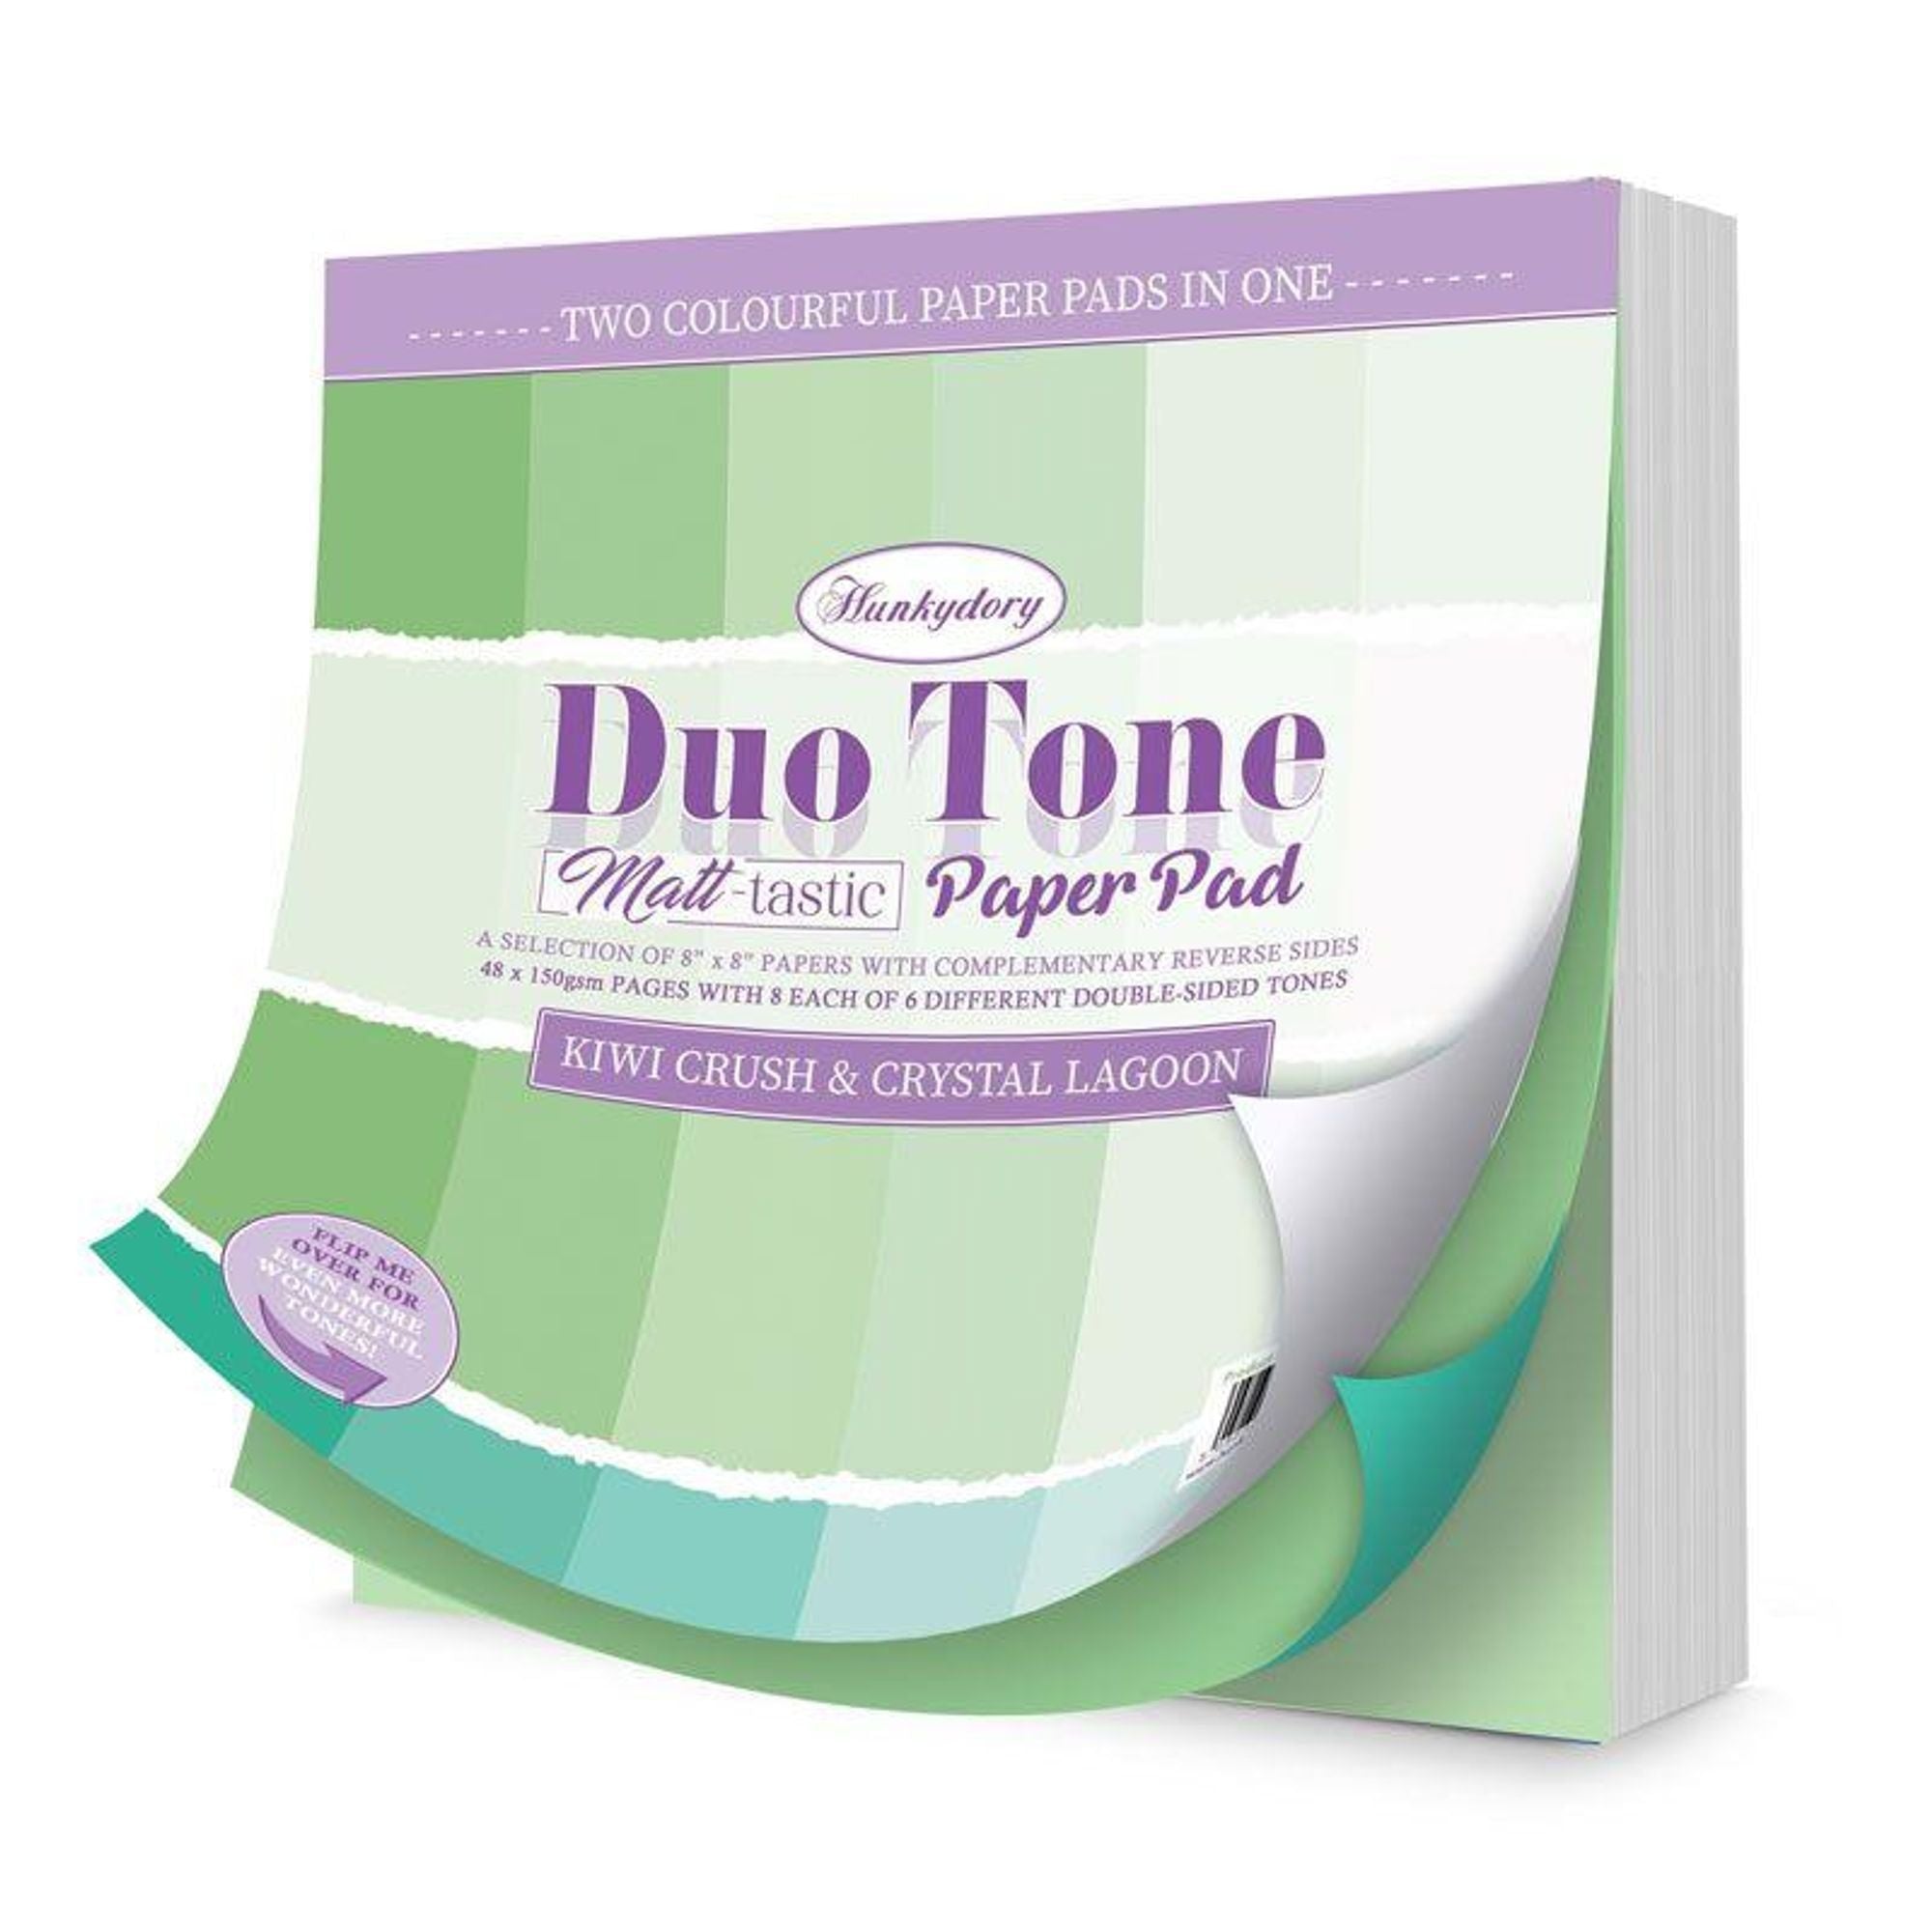 Duo Tone Paper Pad - Kiwi Crush & Crystal Lagoon